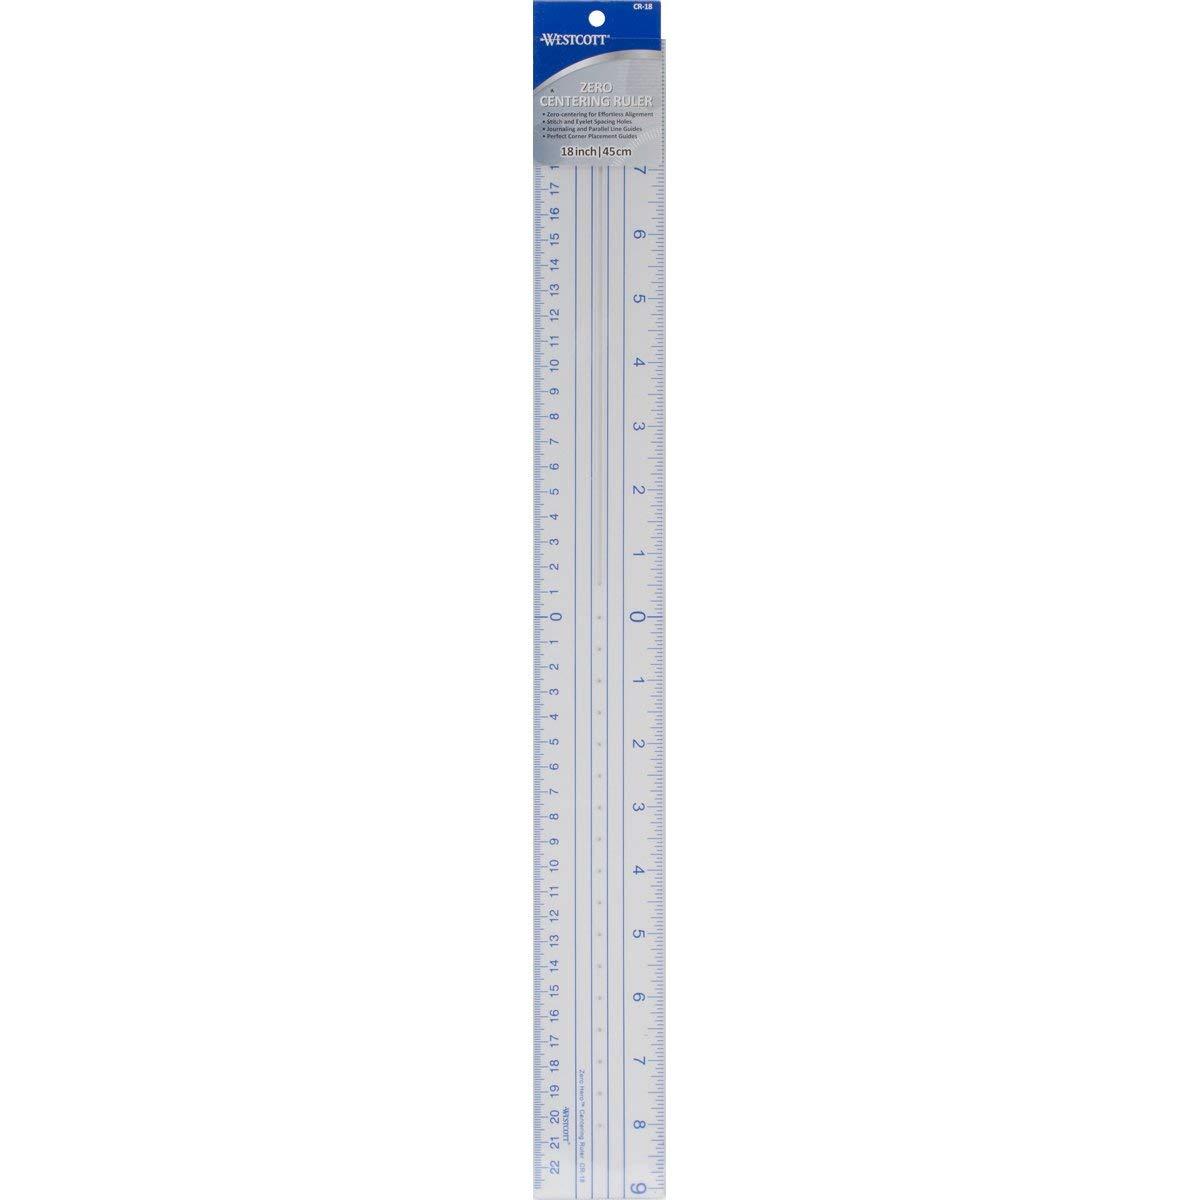 6/12 Clear Acrylic Ruler,Zero-Centering 12 Inch Clear Acrylic Ruler